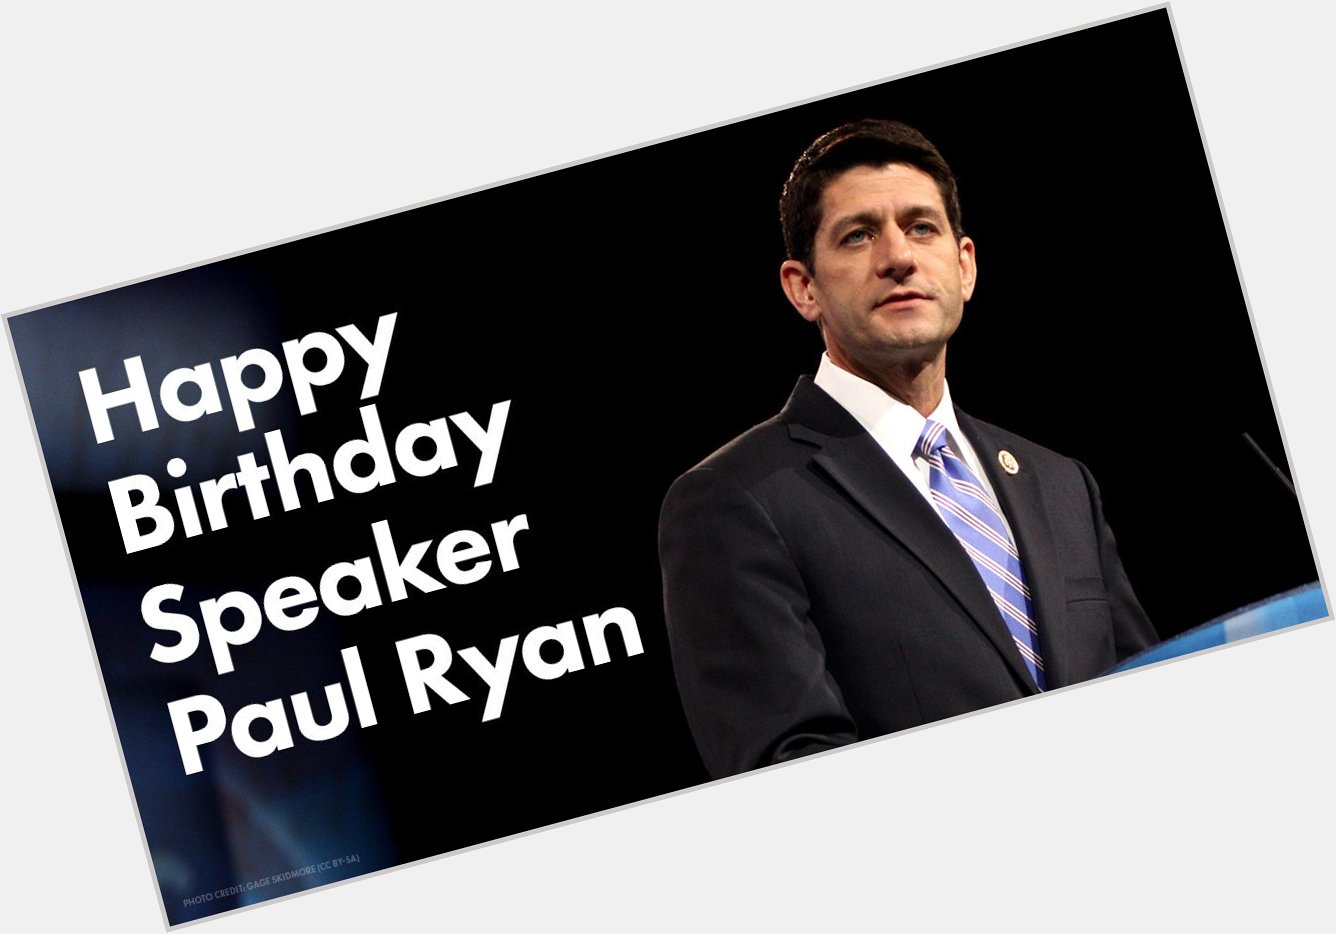   Happy Birthday Speaker Paul Ryan  